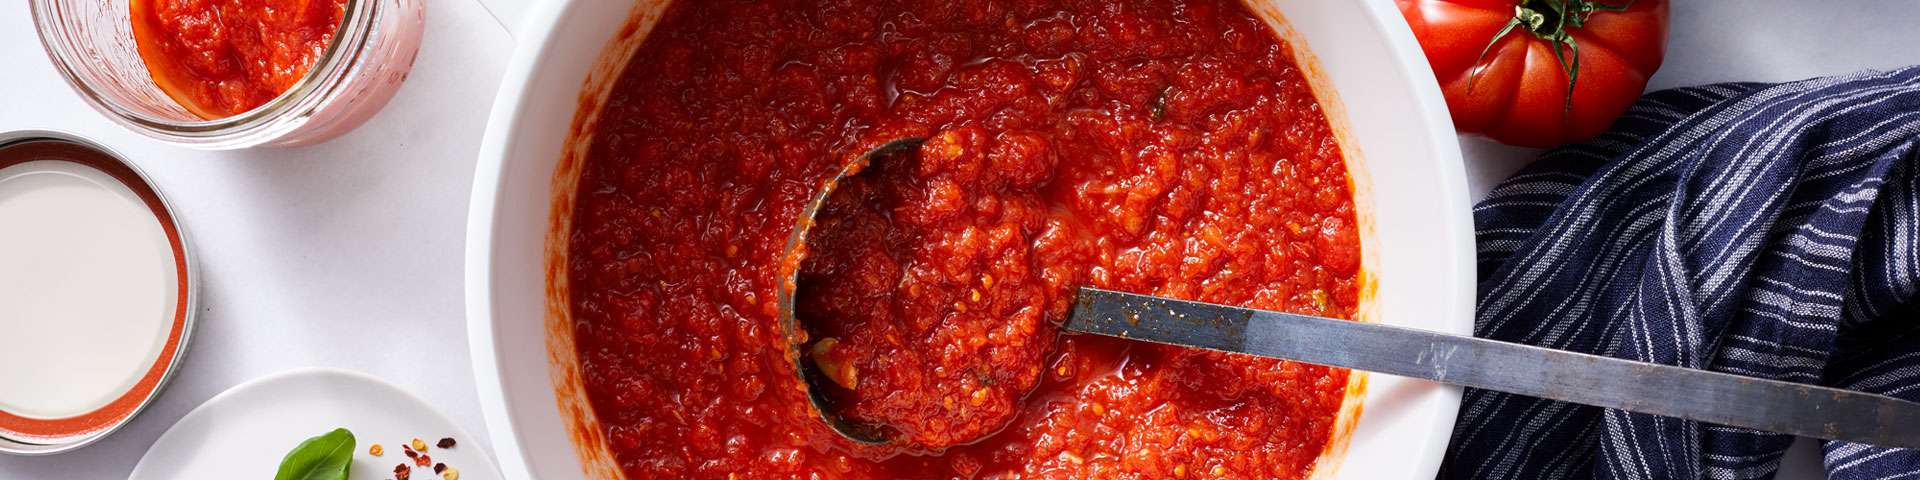 Salsa de tomate casera invertida en una olla